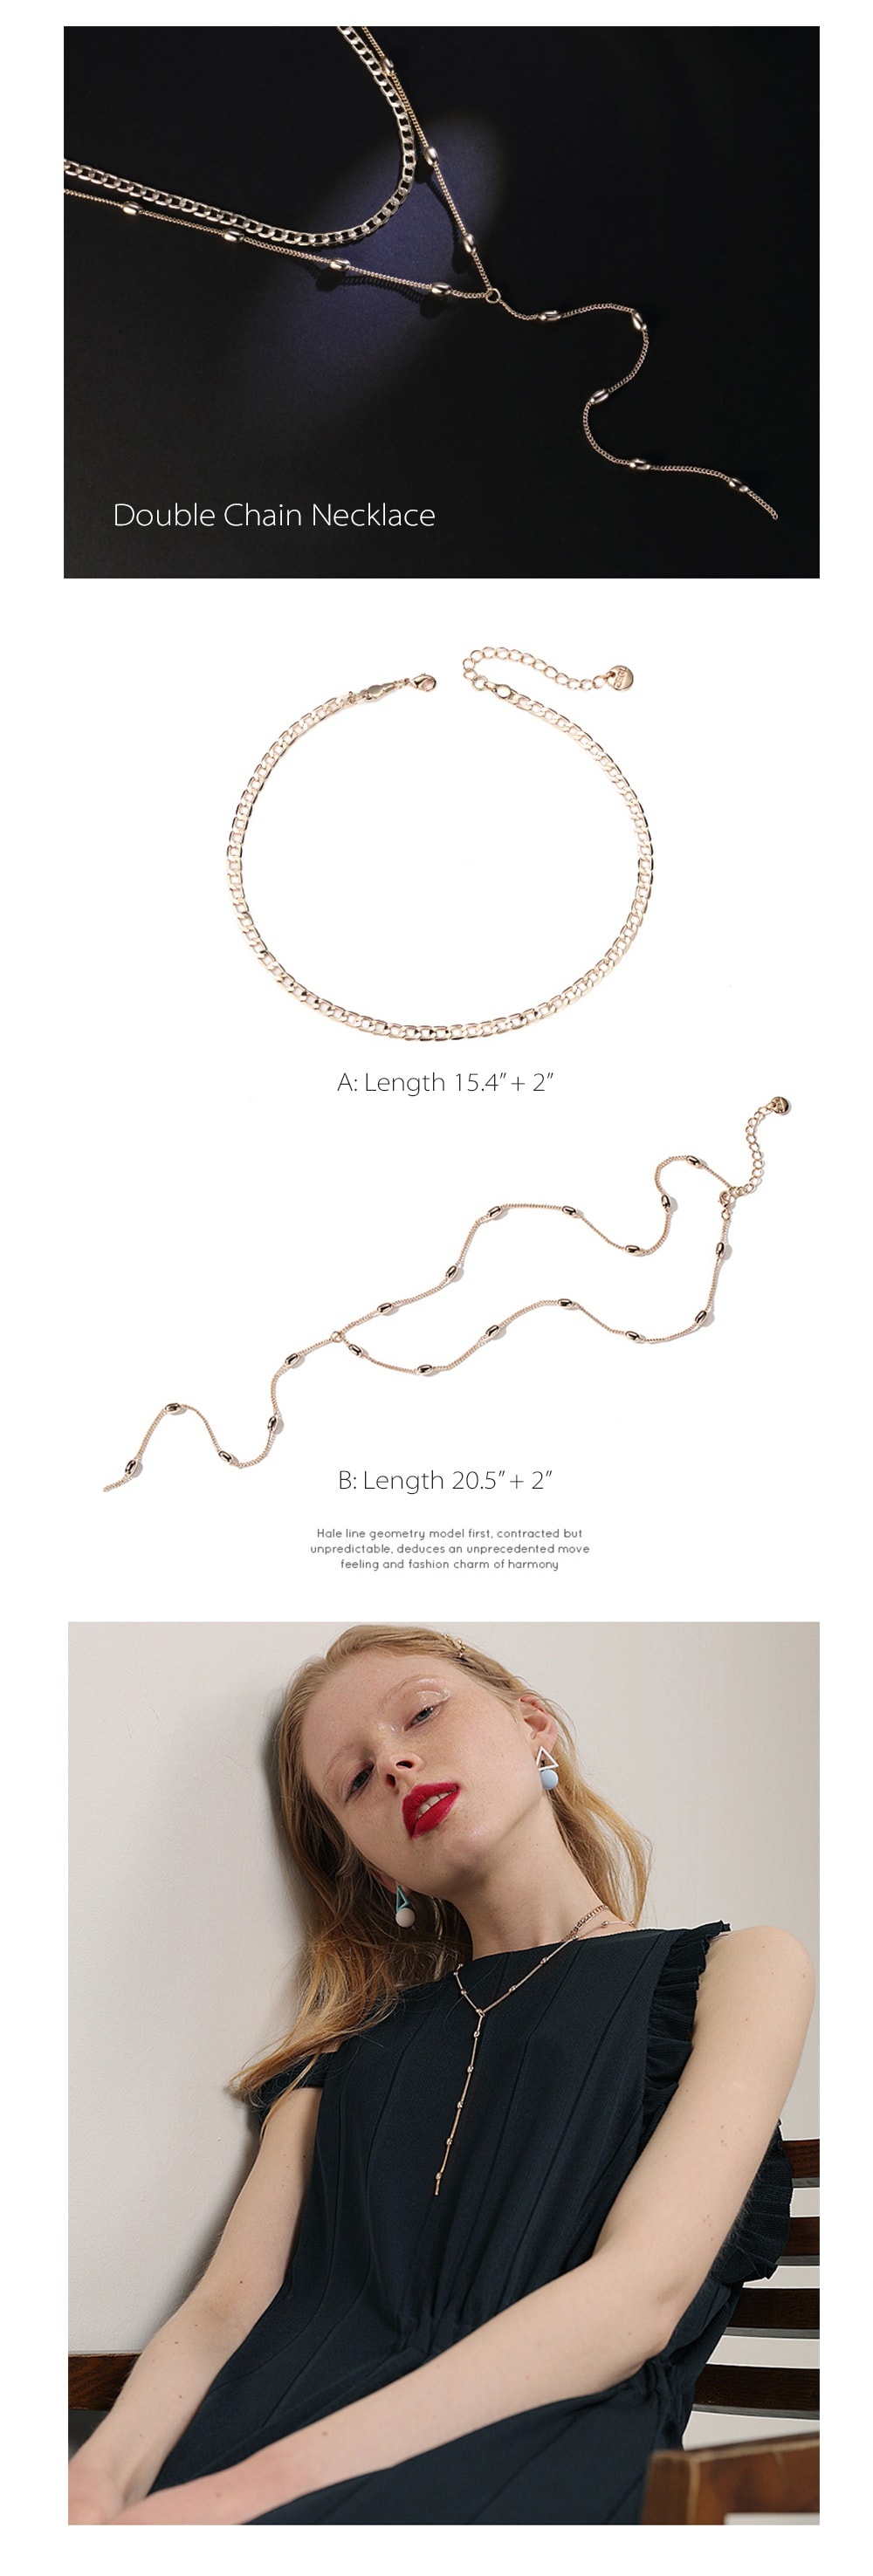 Double Chain Necklace - ApolloBox